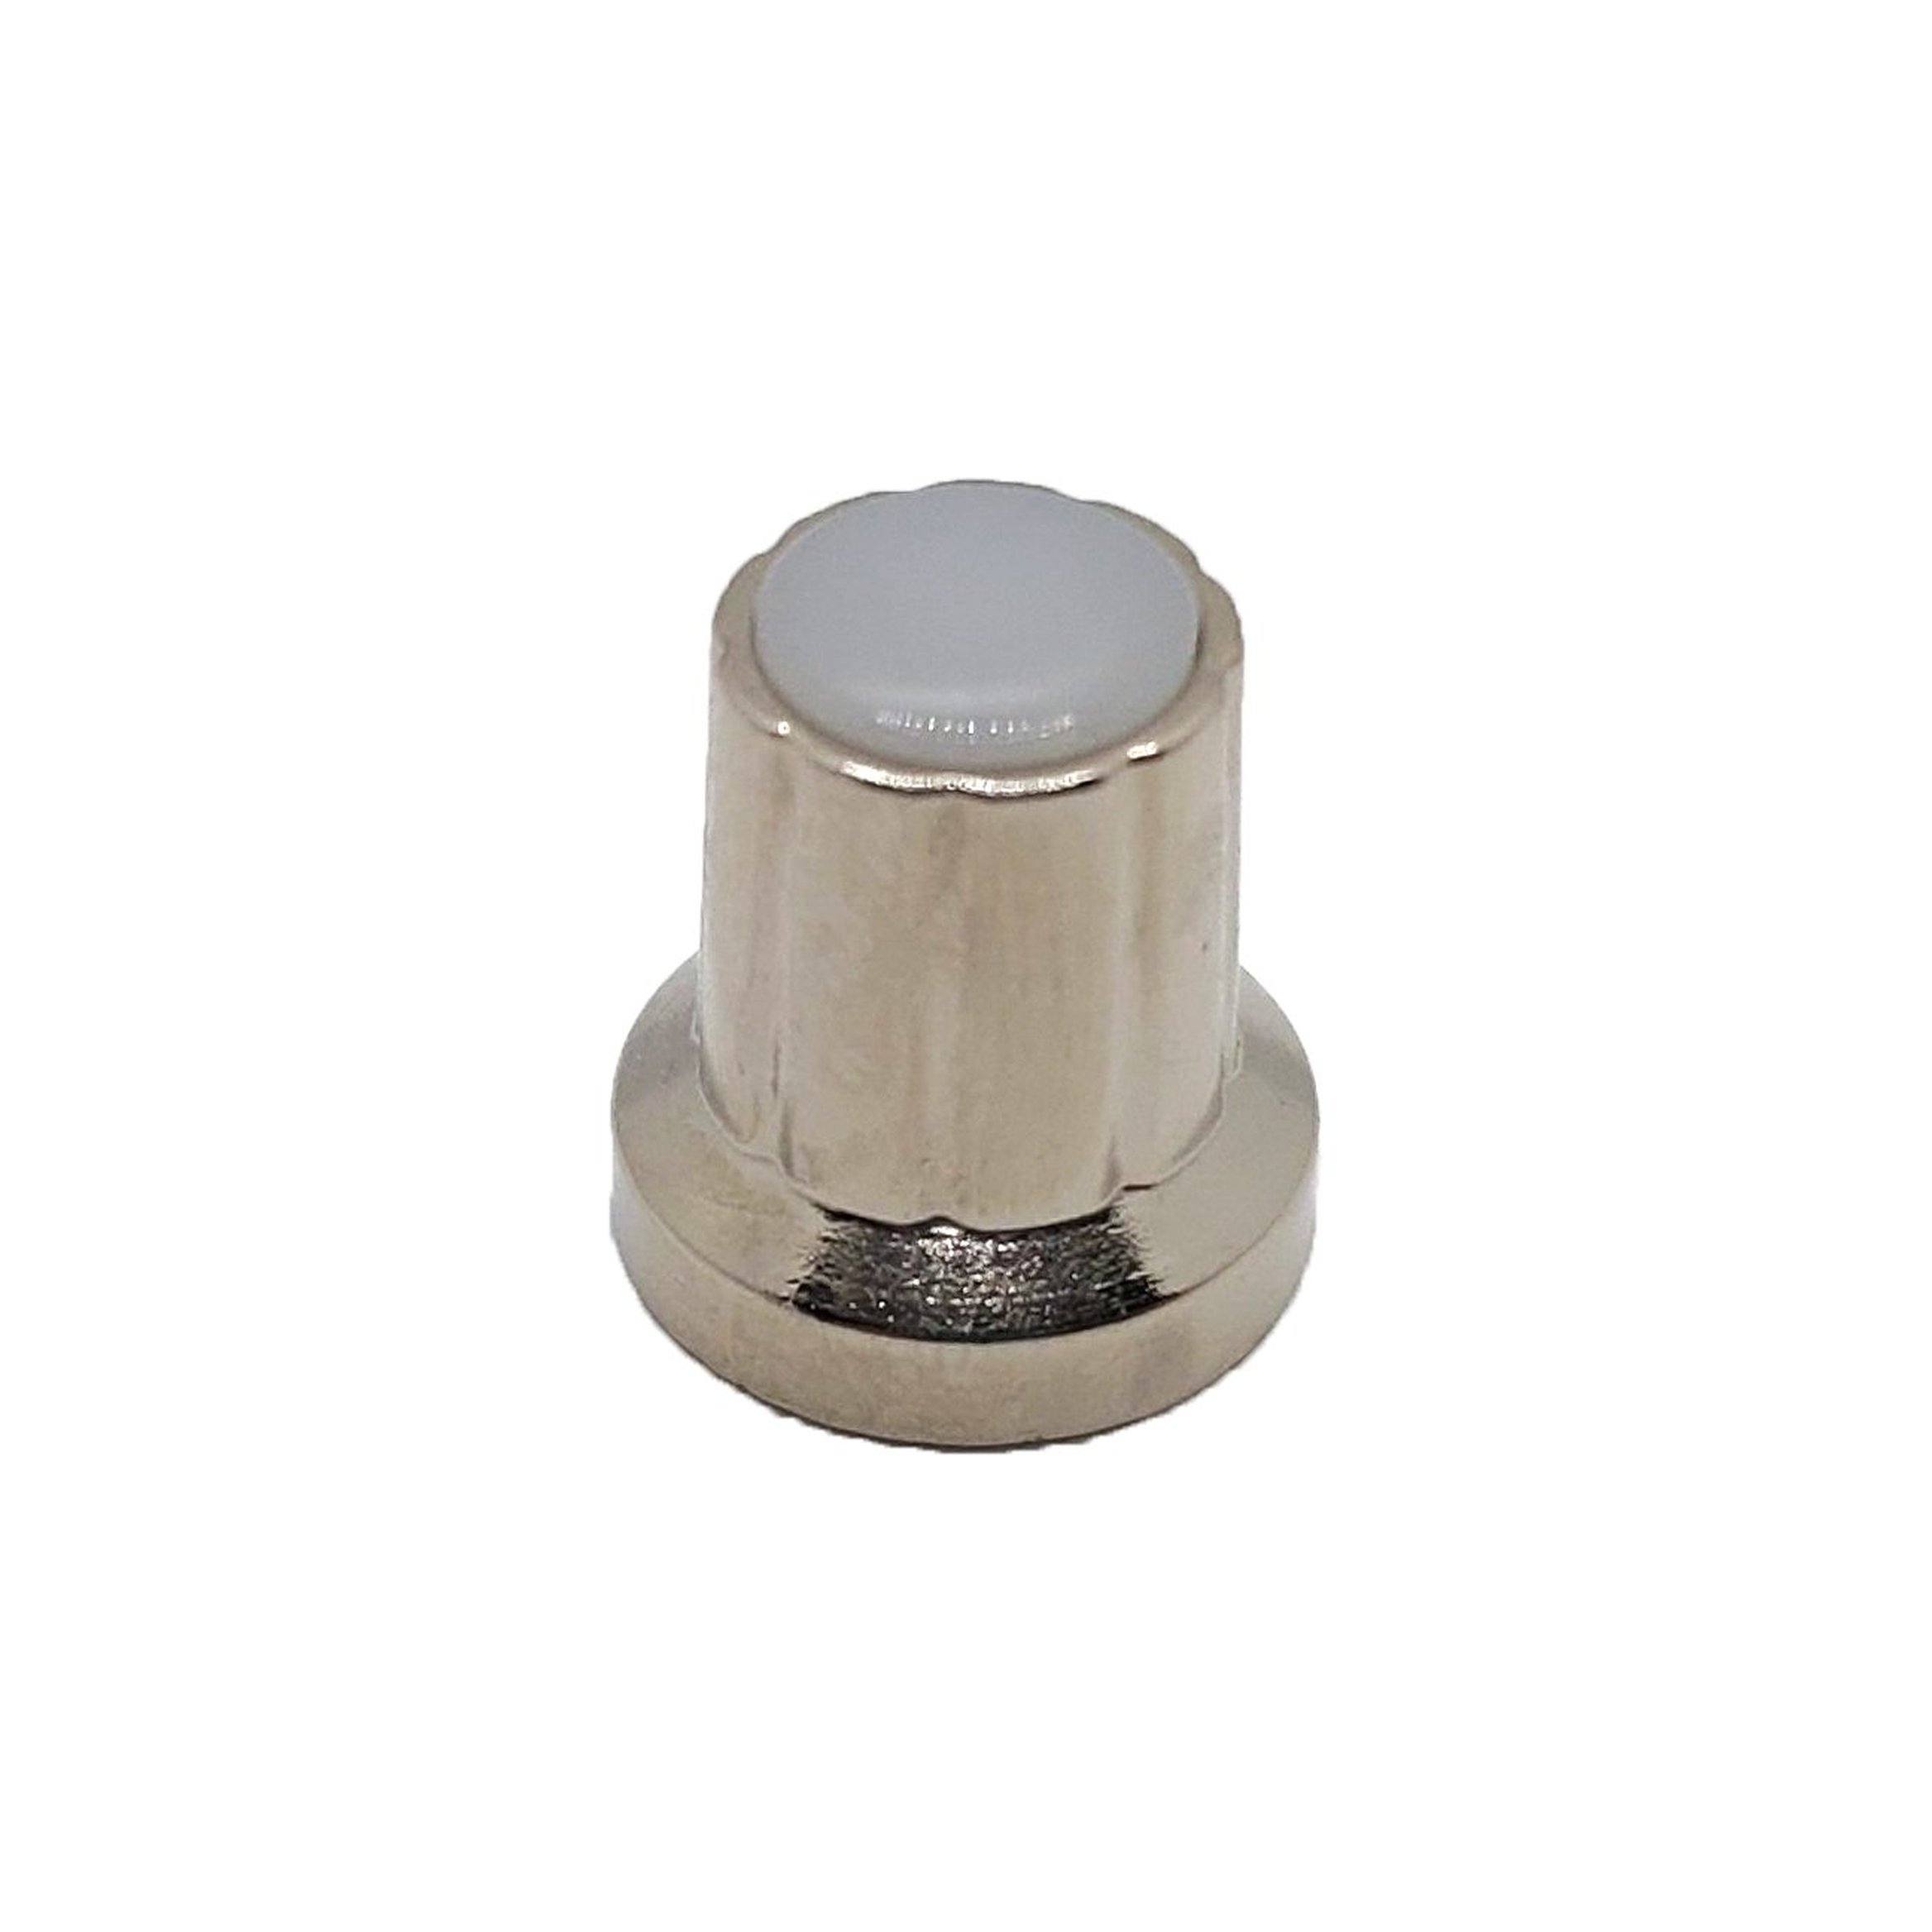 Aluminum silver small knob